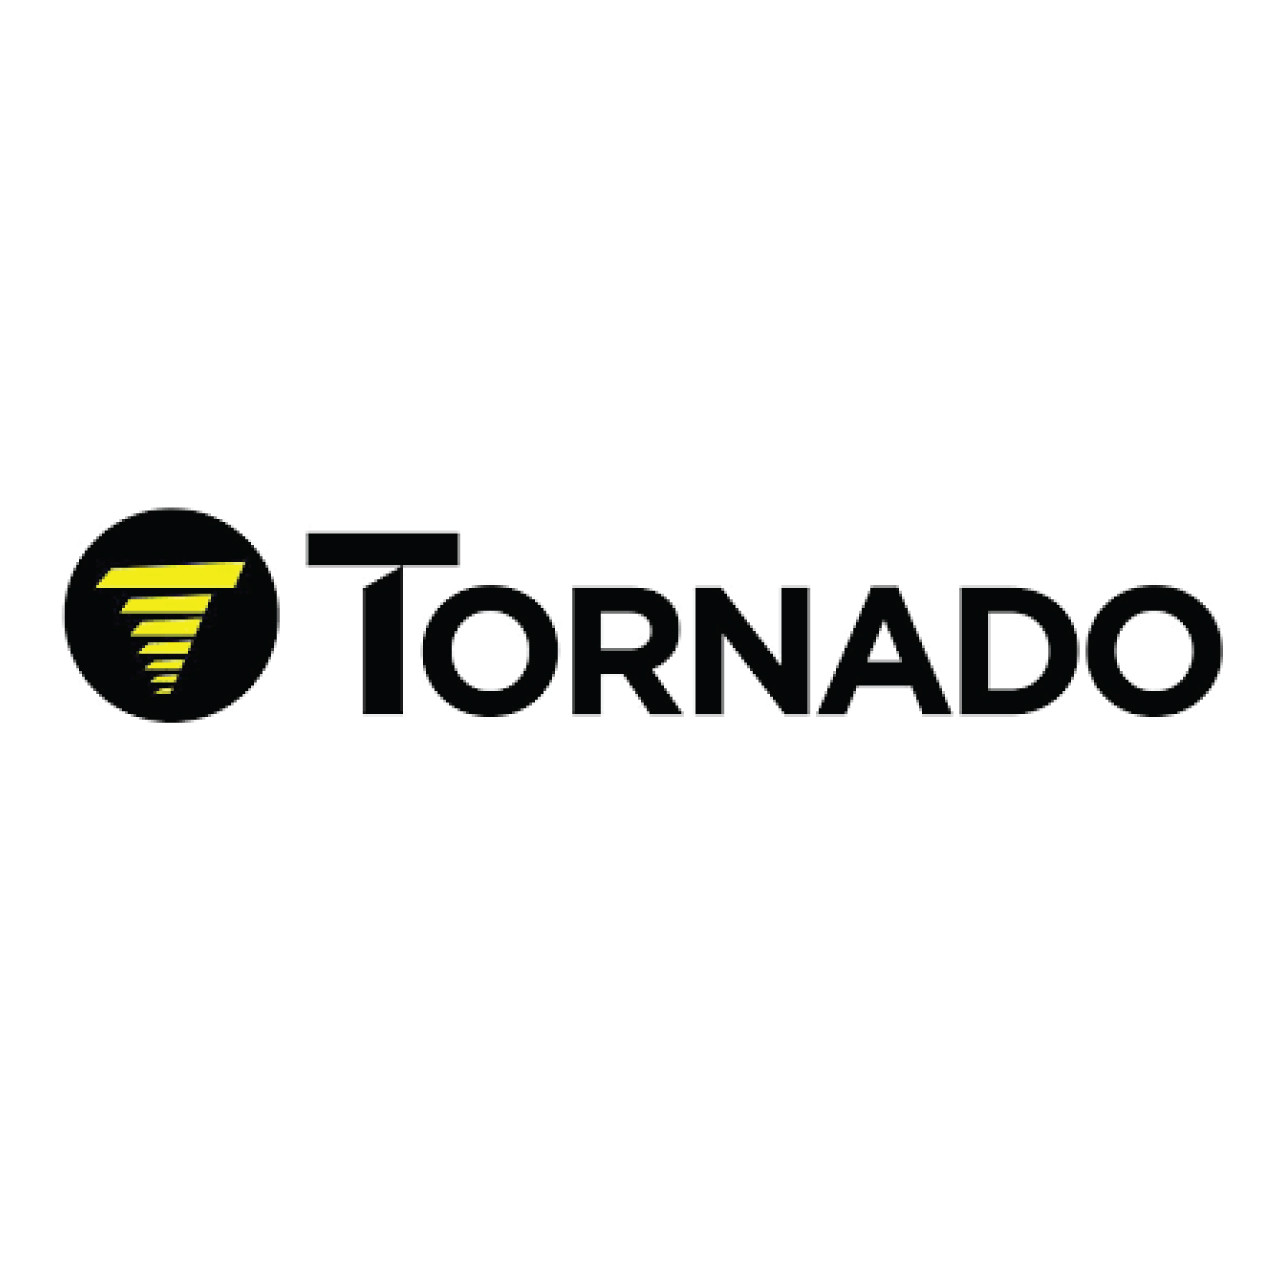 02-4548-0000, Tornado 02-4548-0000, Tornado BLANKING PLUG RECTANGULAR, Tornado parts